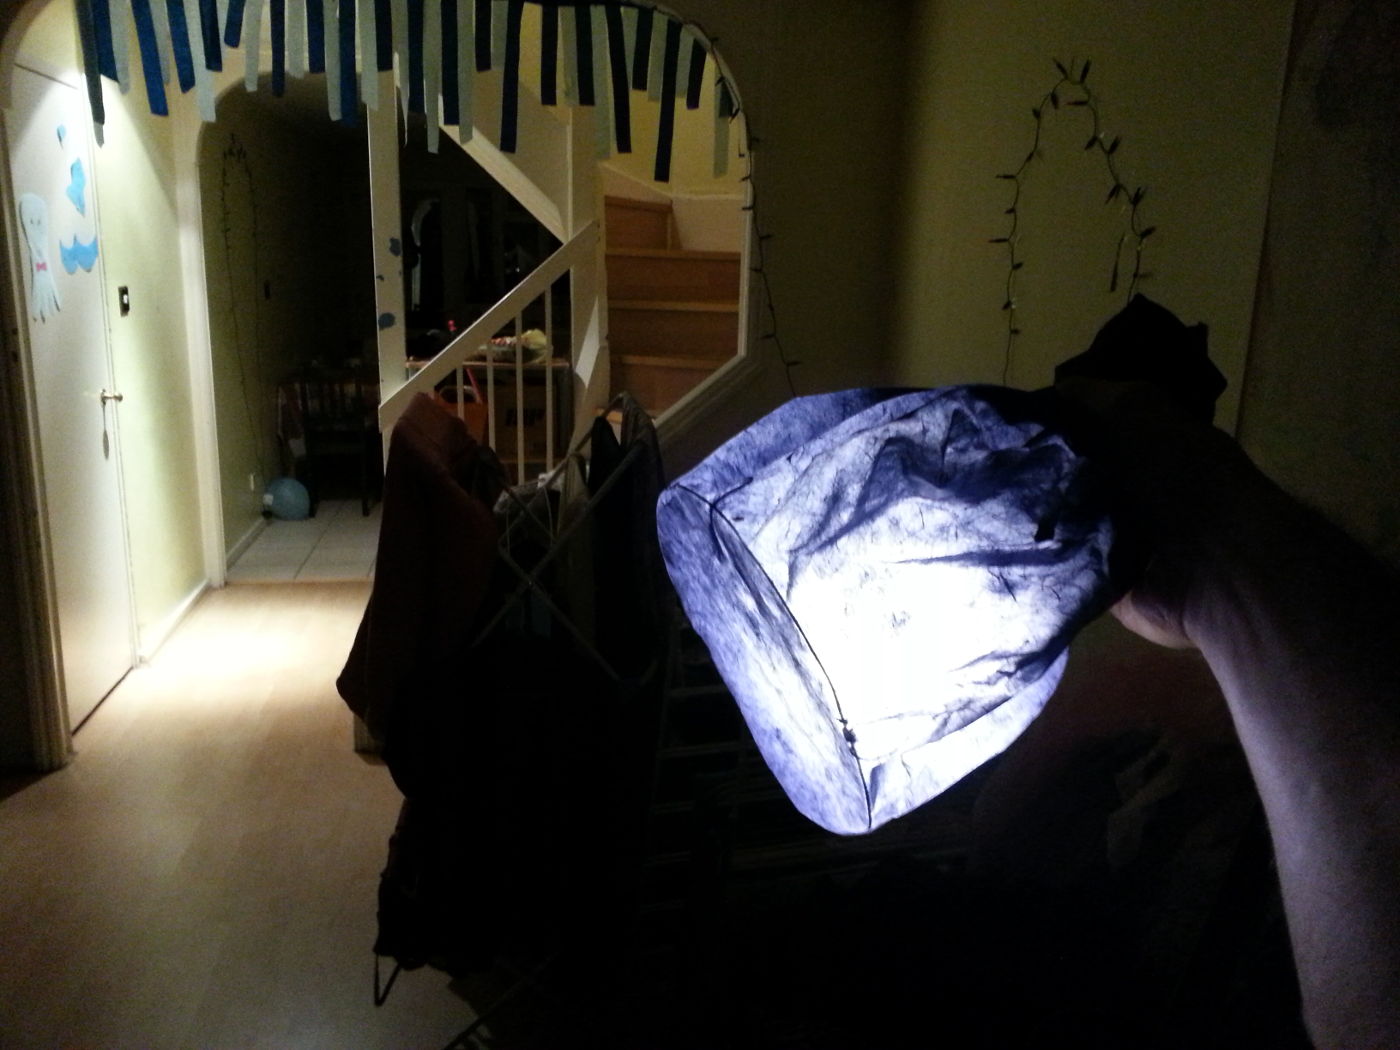 The lantern in a dim-light environment